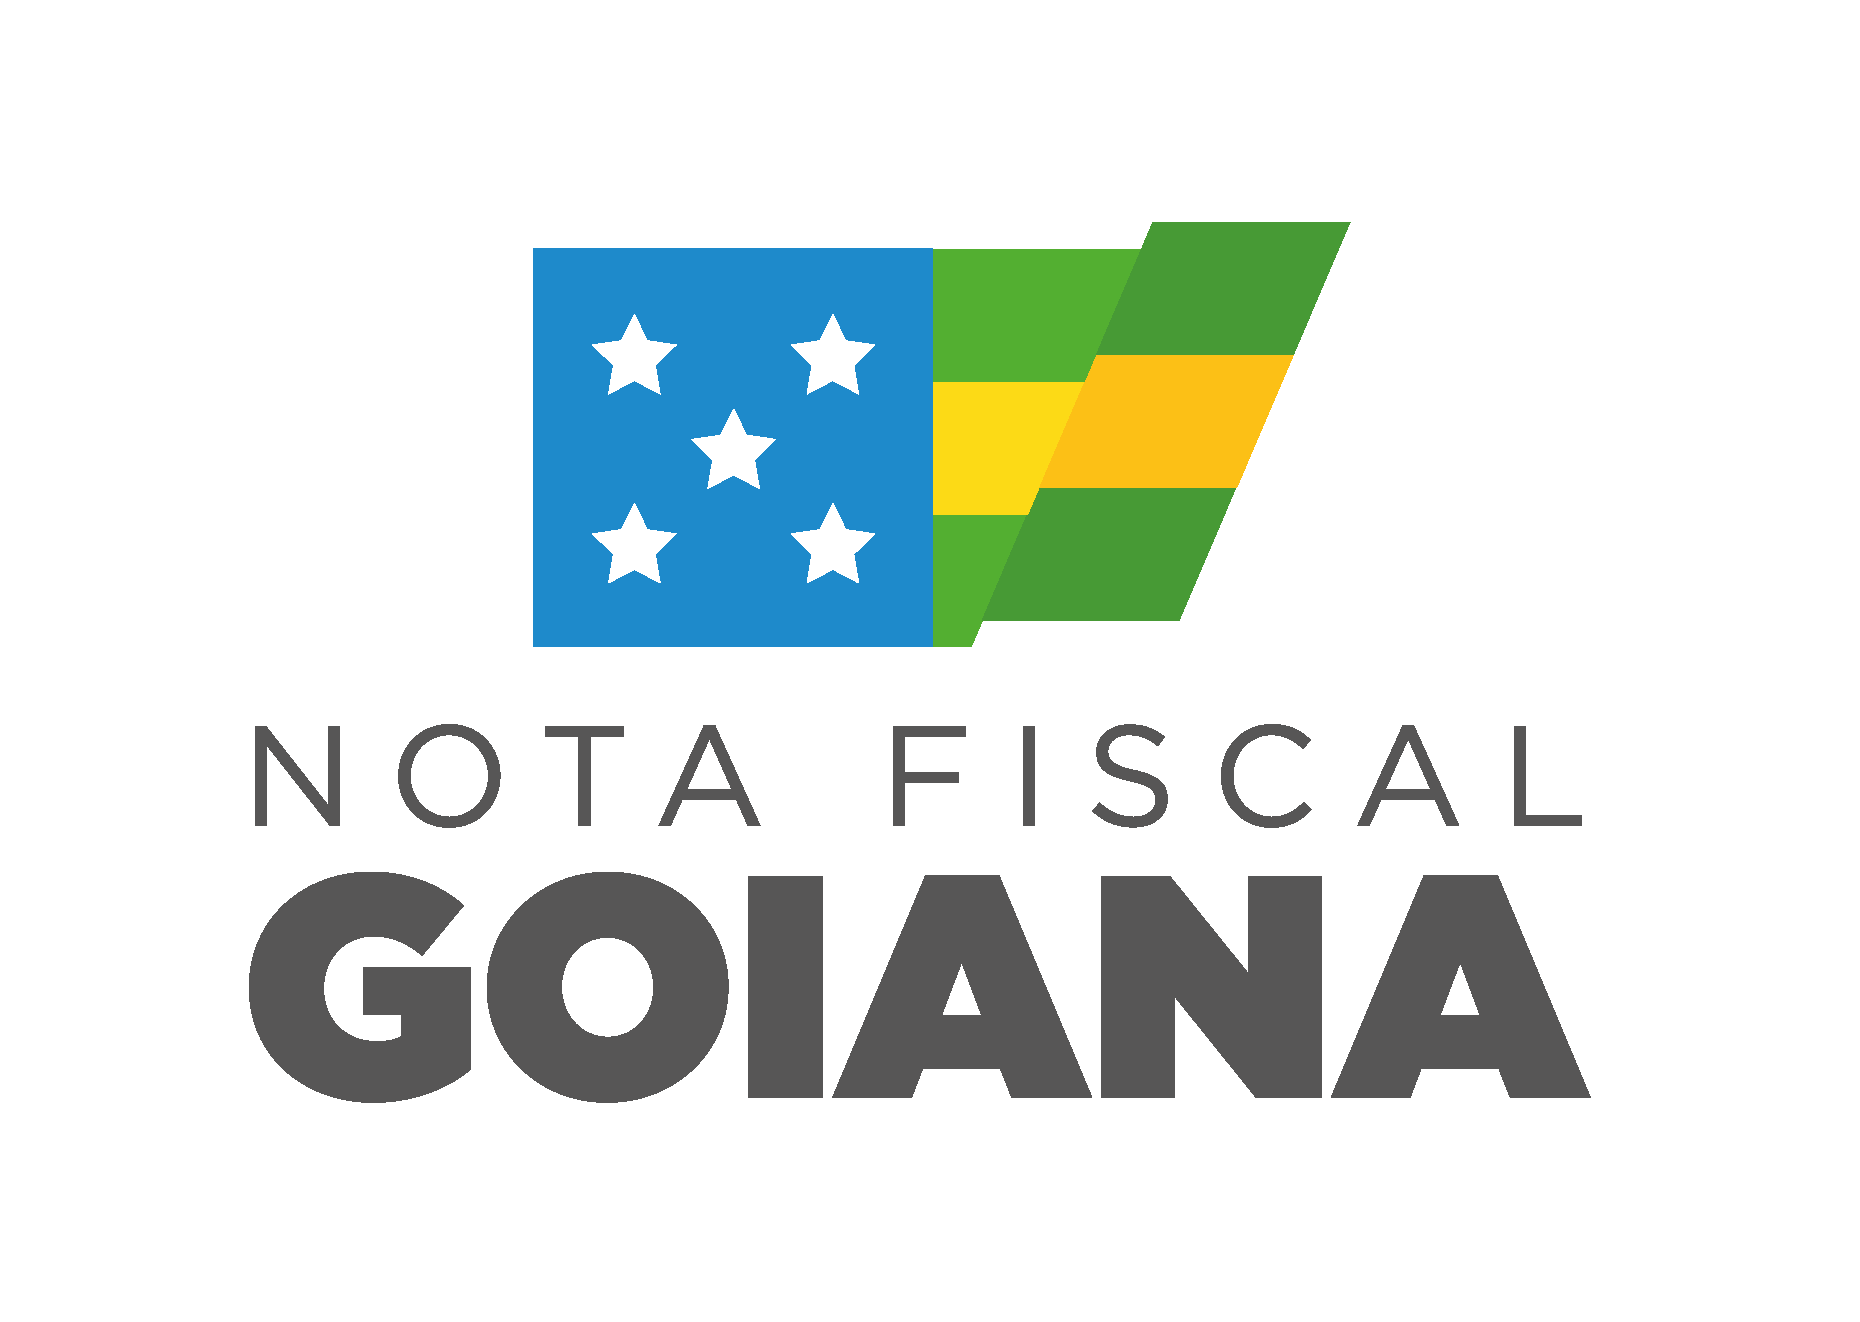 Nota Fiscal Goiana logo